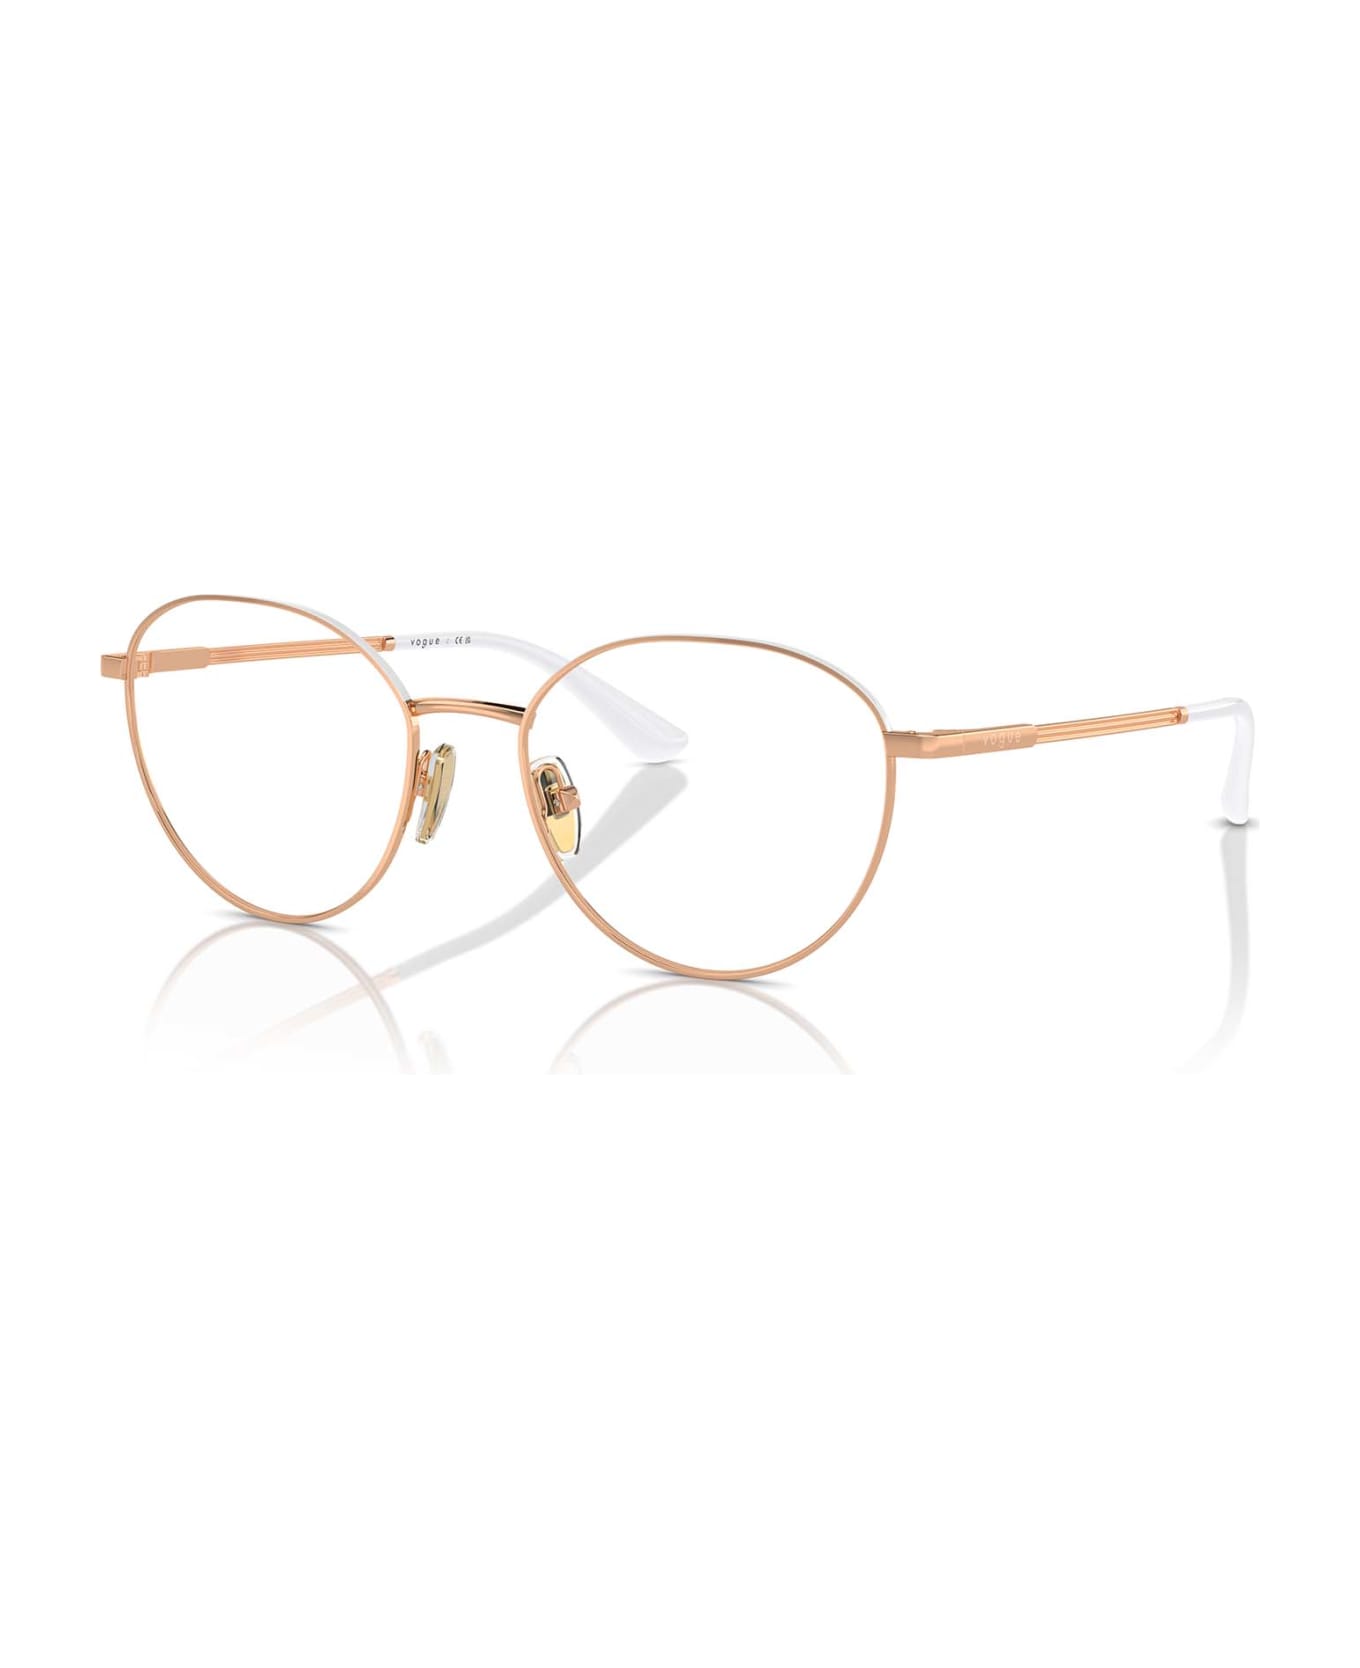 Vogue Eyewear Vo4306 Rose Gold / Top White Glasses - Rose Gold / Top White アイウェア